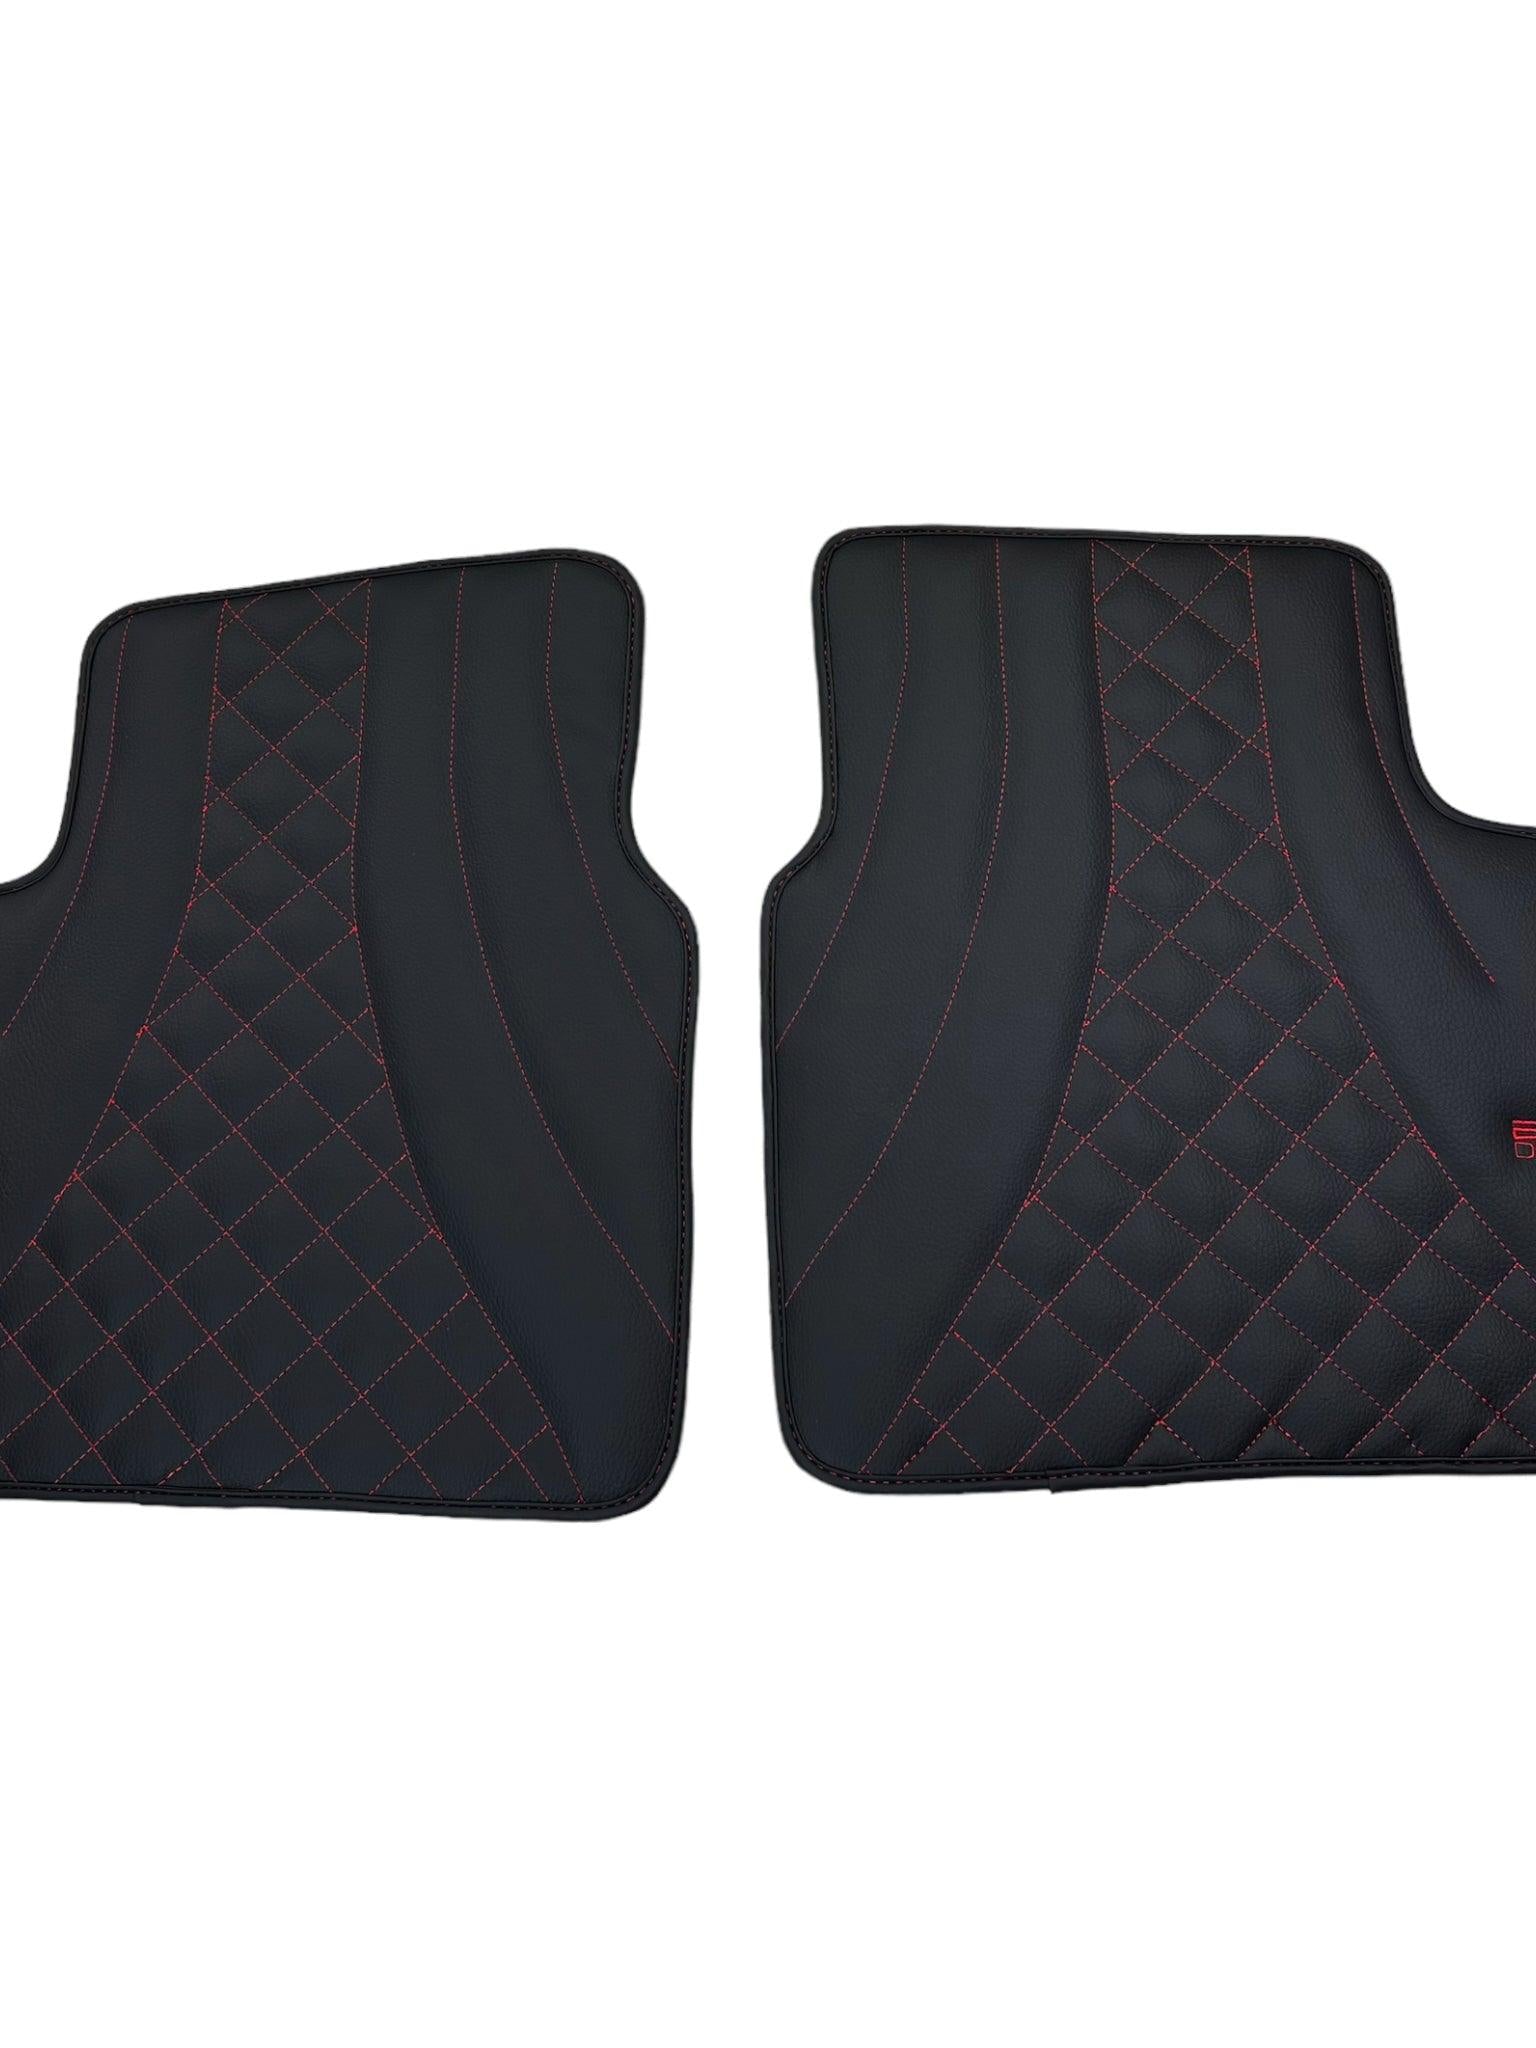 Black Leather Floor Mats for Mercedes-Benz G Class W463 2019-2022 ER56 Design